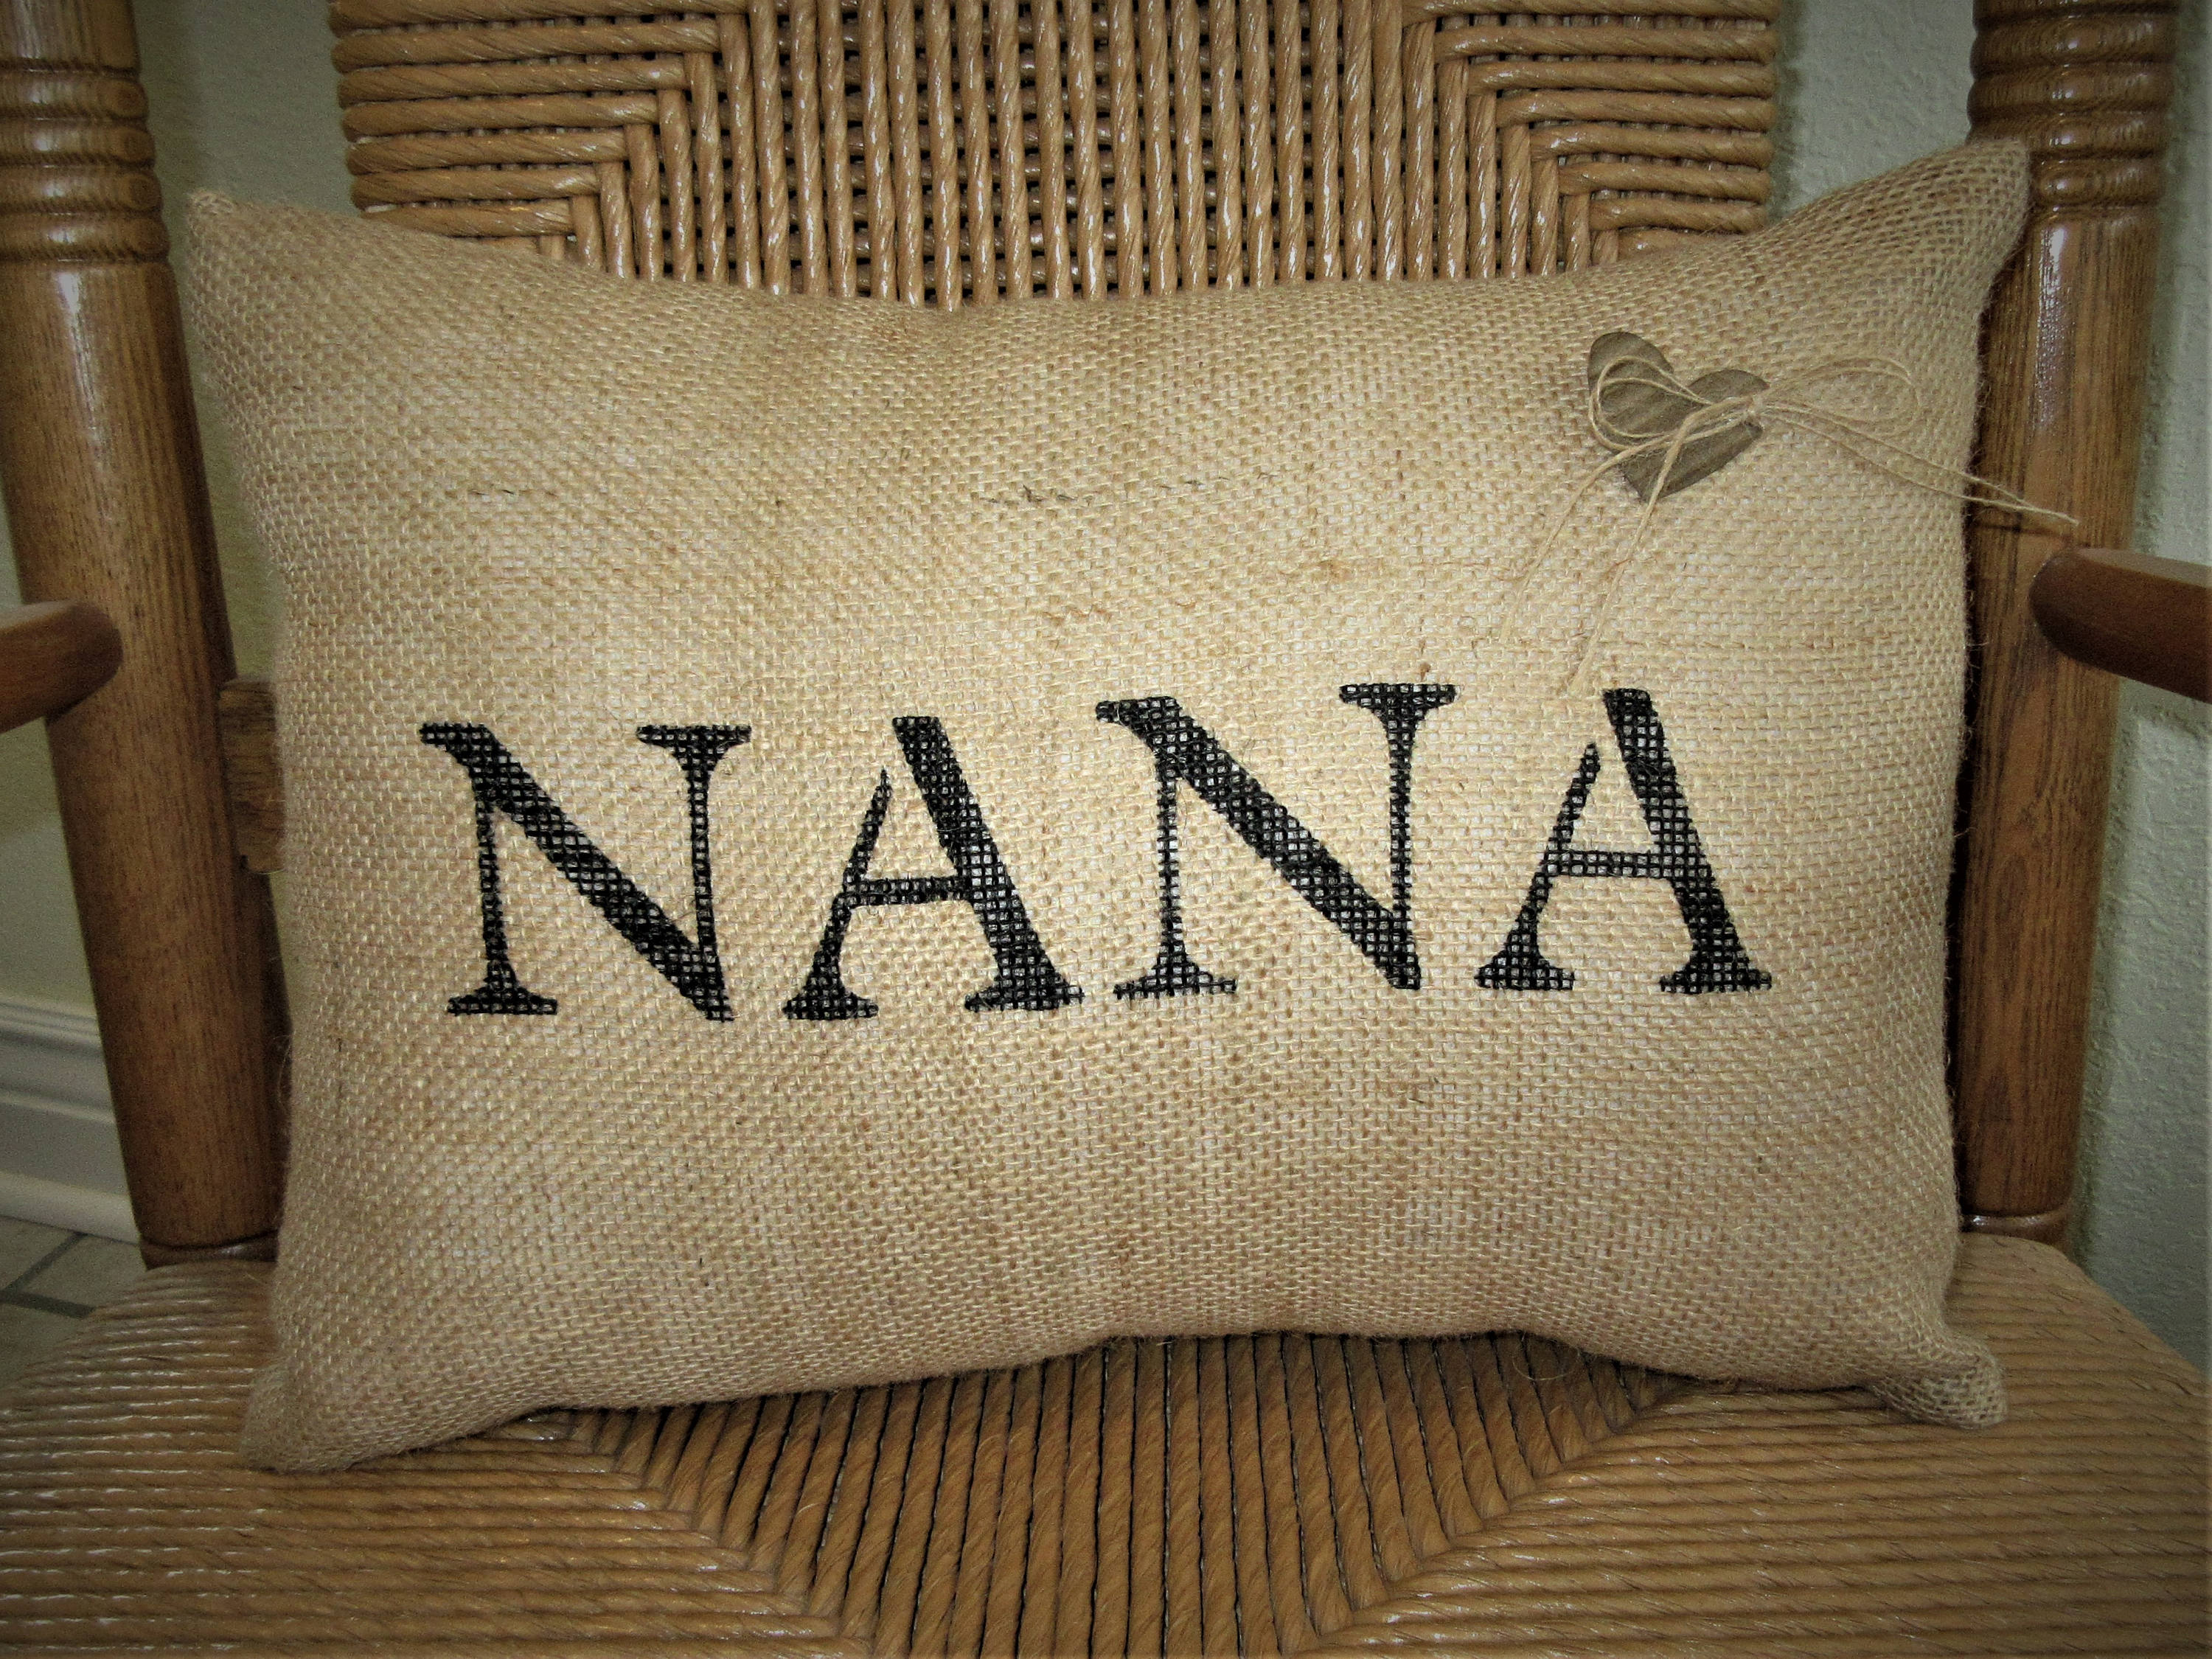 Nana Personalized Lumbar Burlap Pillow